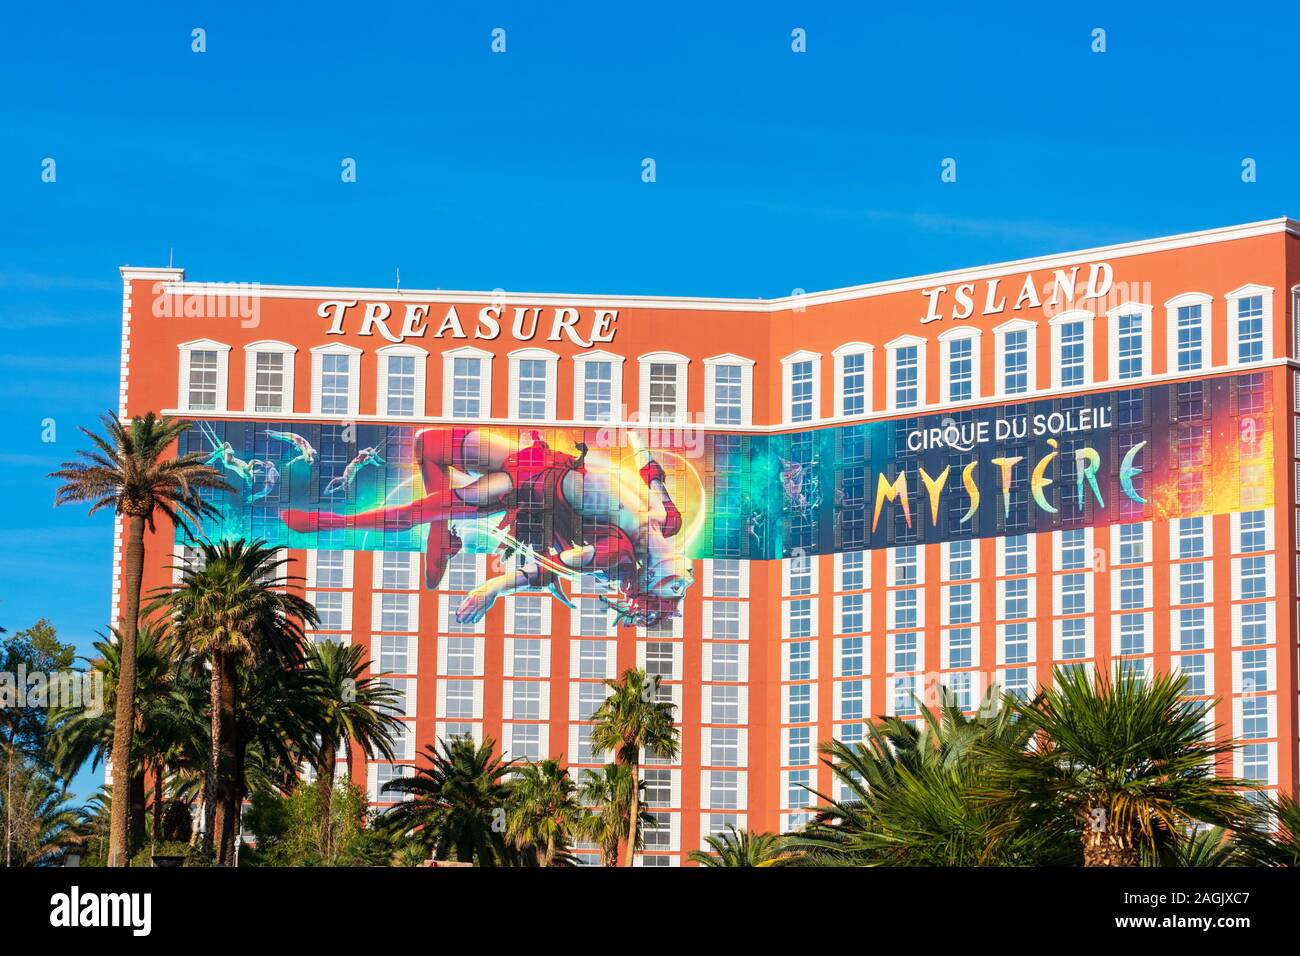 Treasure Island luxury hotel and casino resort facade and exterior on sunny day as seen from Las Vegas Strip - Las Vegas, Nevada, USA - December, 2019 Stock Photo